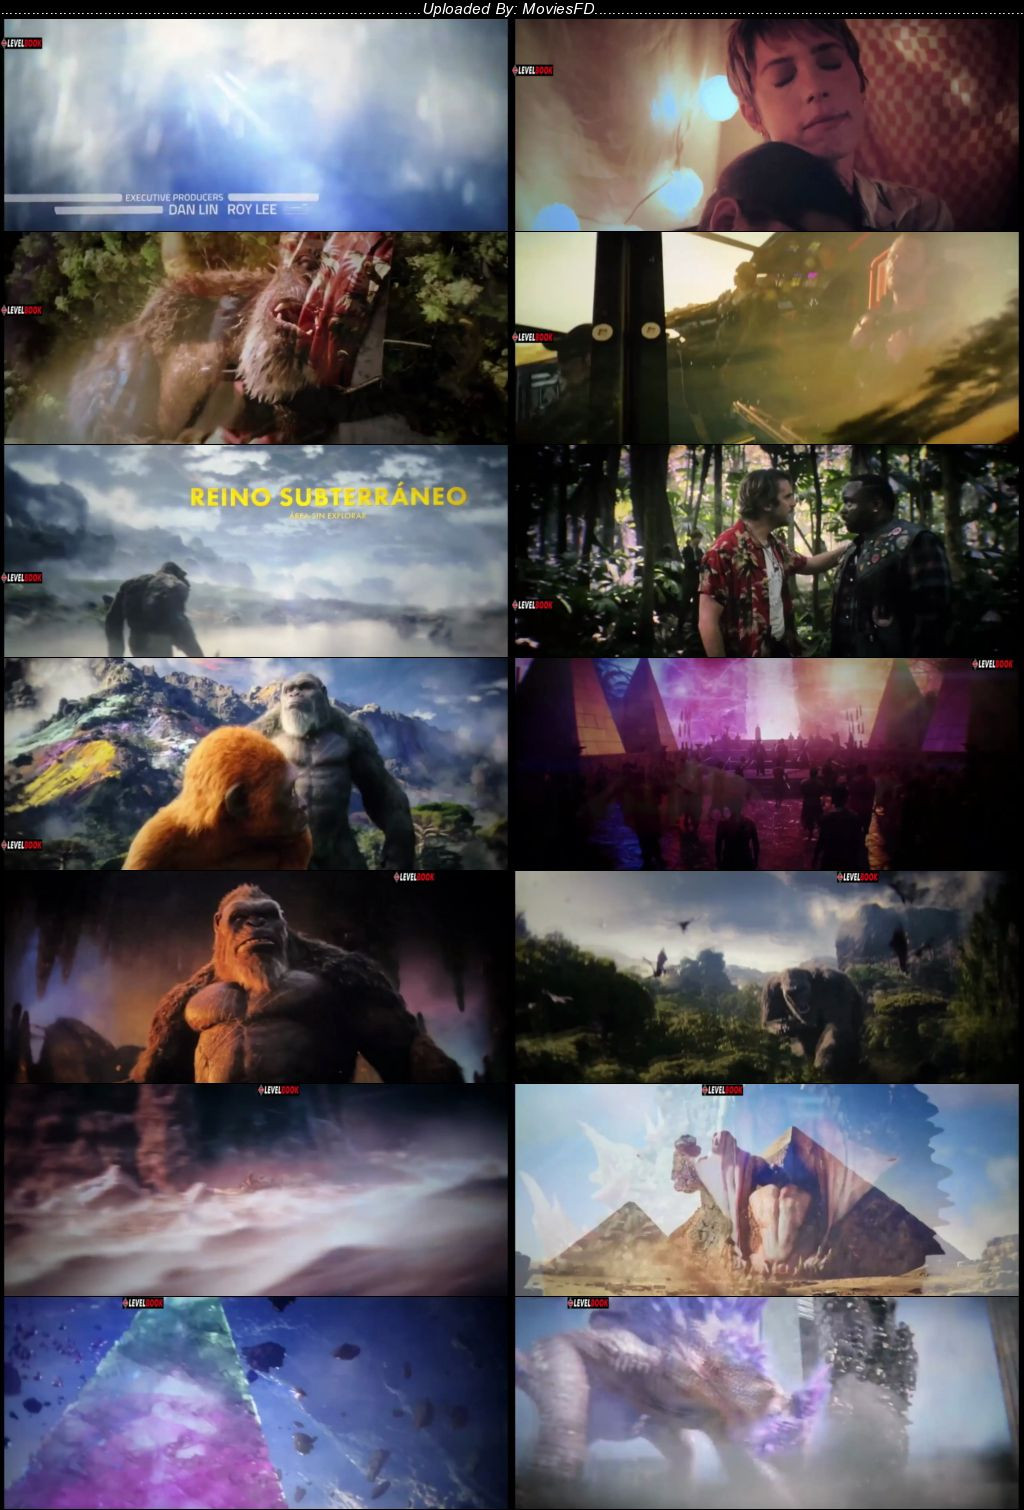 Download Godzilla x Kong: The New Empire (2024) HDCam [Hindi + Tamil + Telugu + English] ESub 480p 720p 1080p